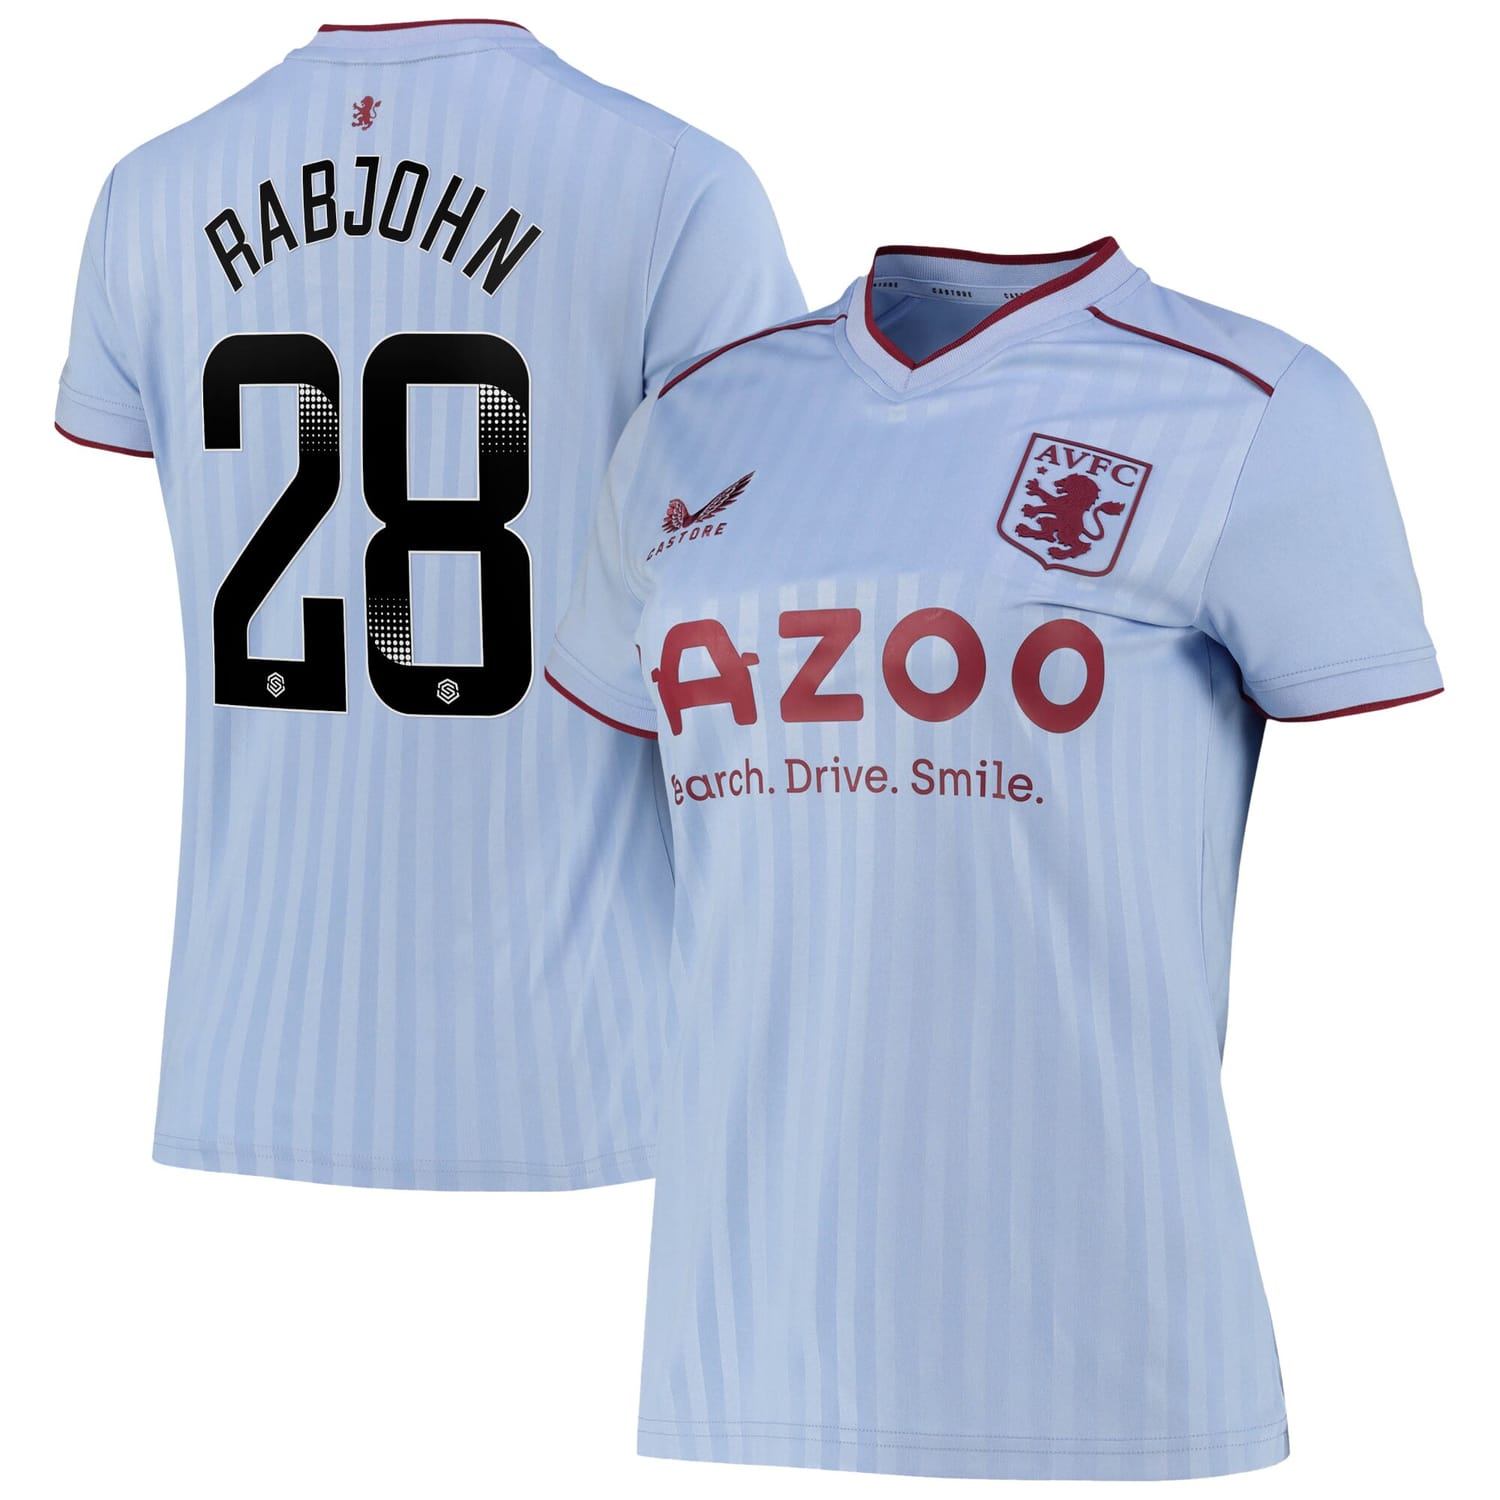 Premier League Aston Villa Away Jersey Shirt 2022-23 player Evie Rabjohn 28 printing for Women